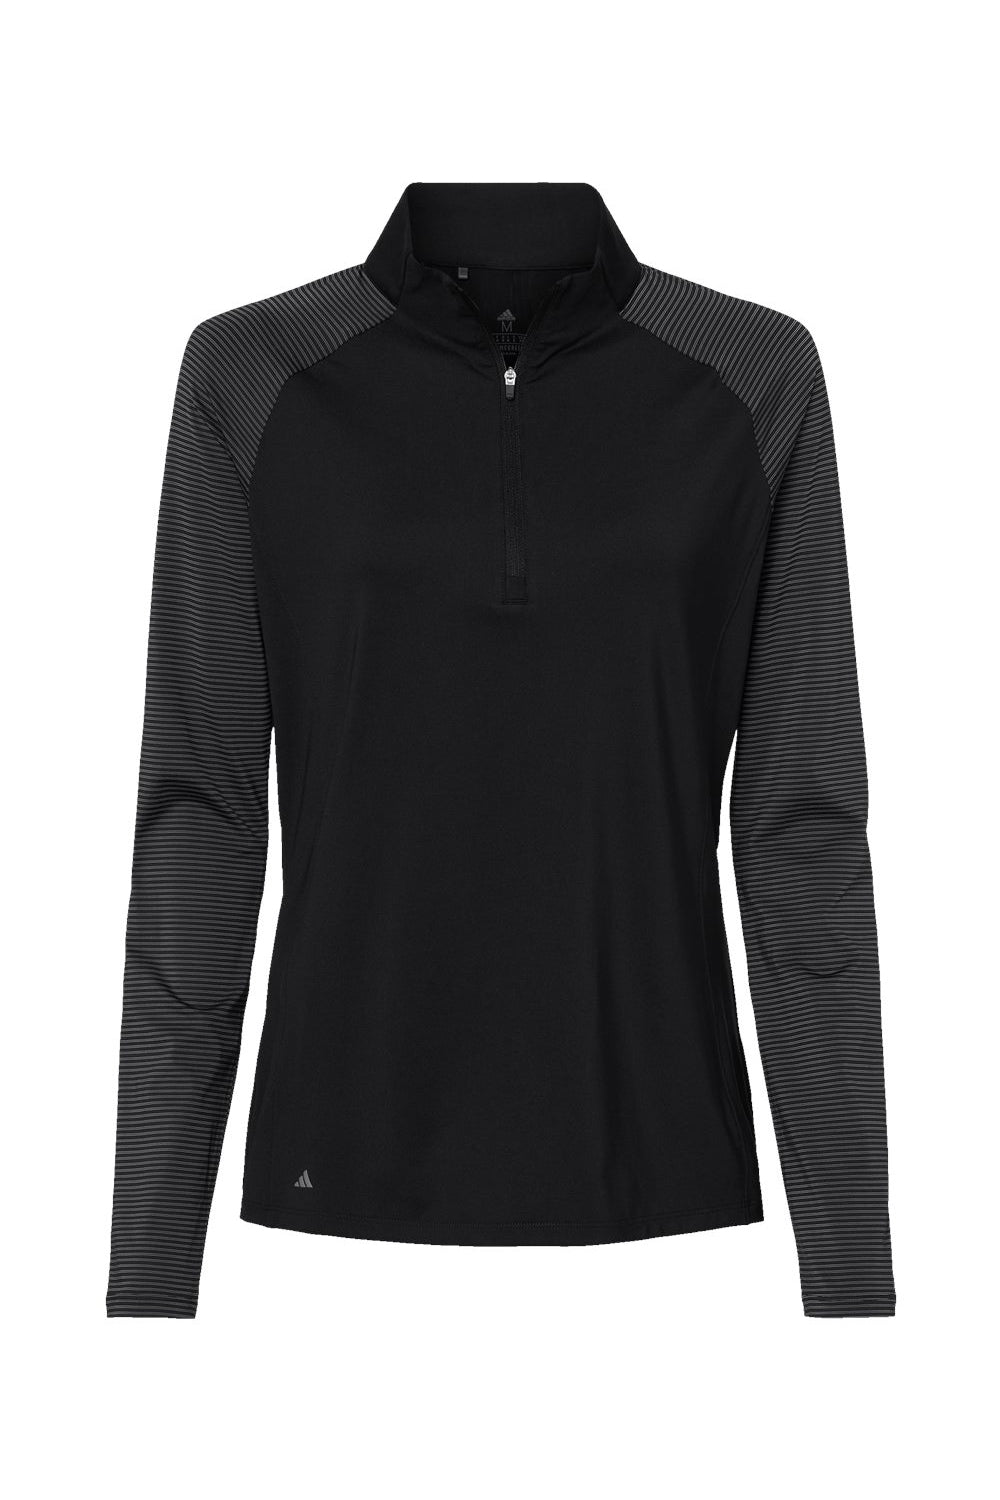 Adidas A521 Womens Stripe Block Moisture Wicking 1/4 Zip Sweatshirt Black Flat Front